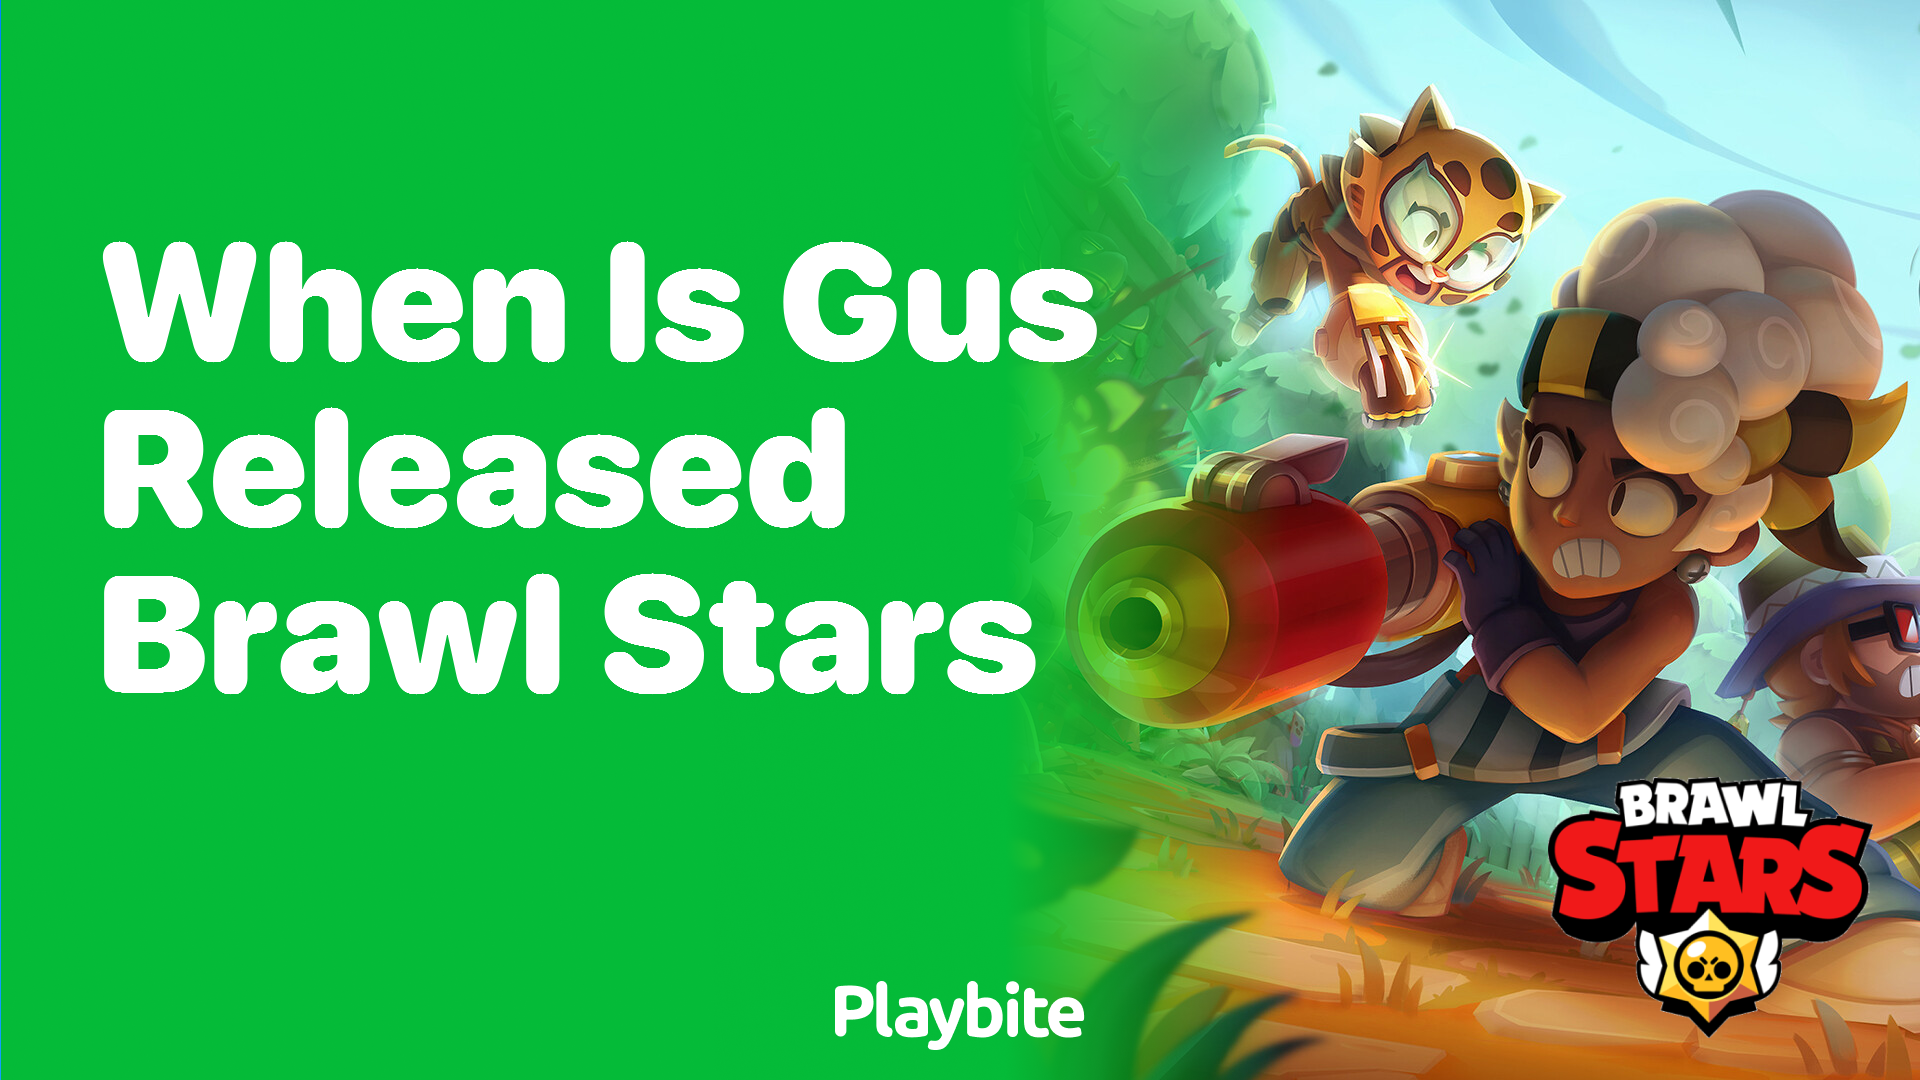 When is Gus Released in Brawl Stars?